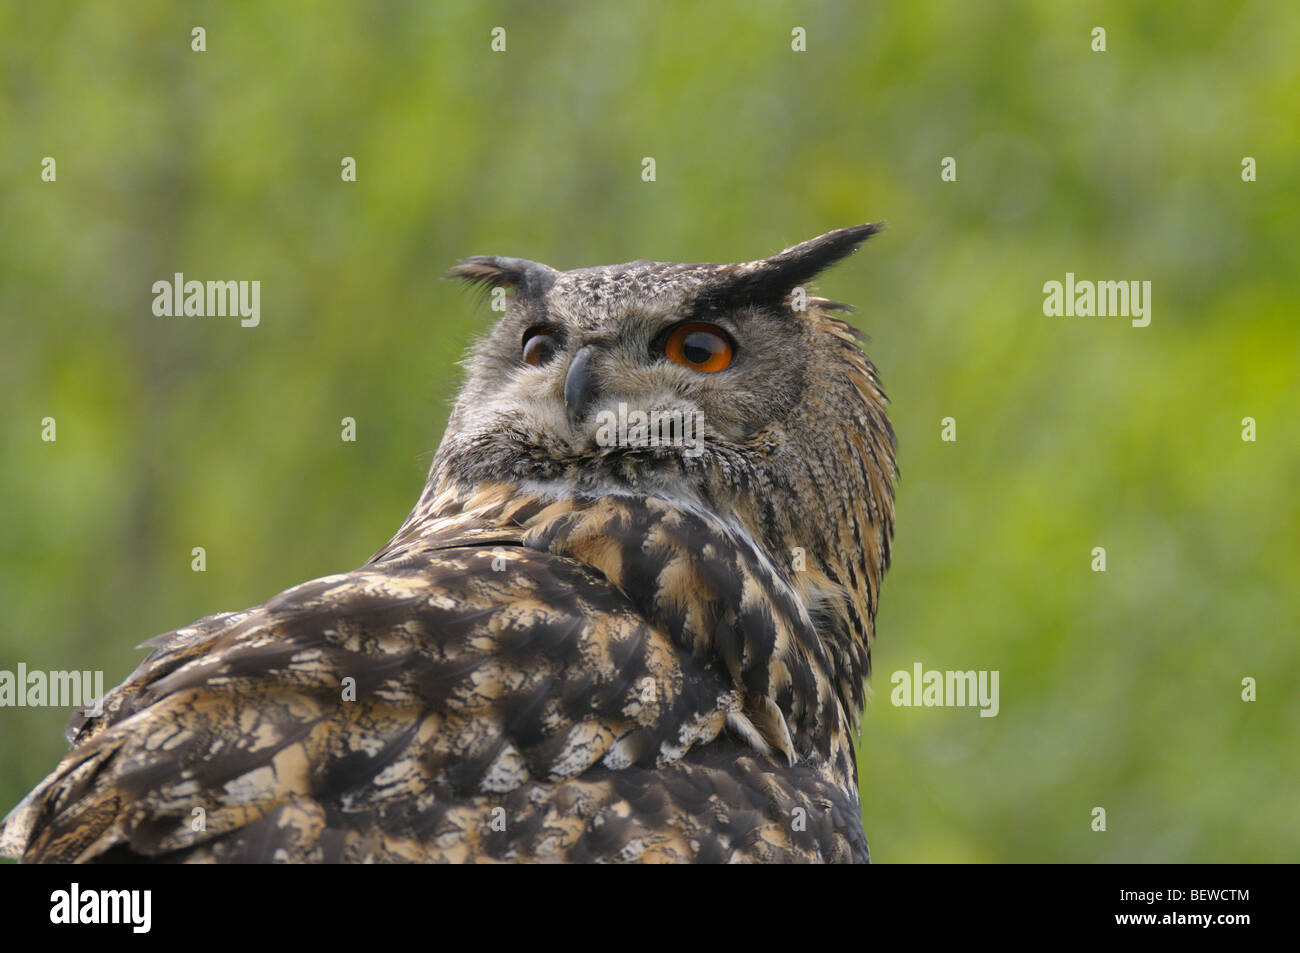 Eagle owl (Bubo bubo), close-up, low angle view Stock Photo